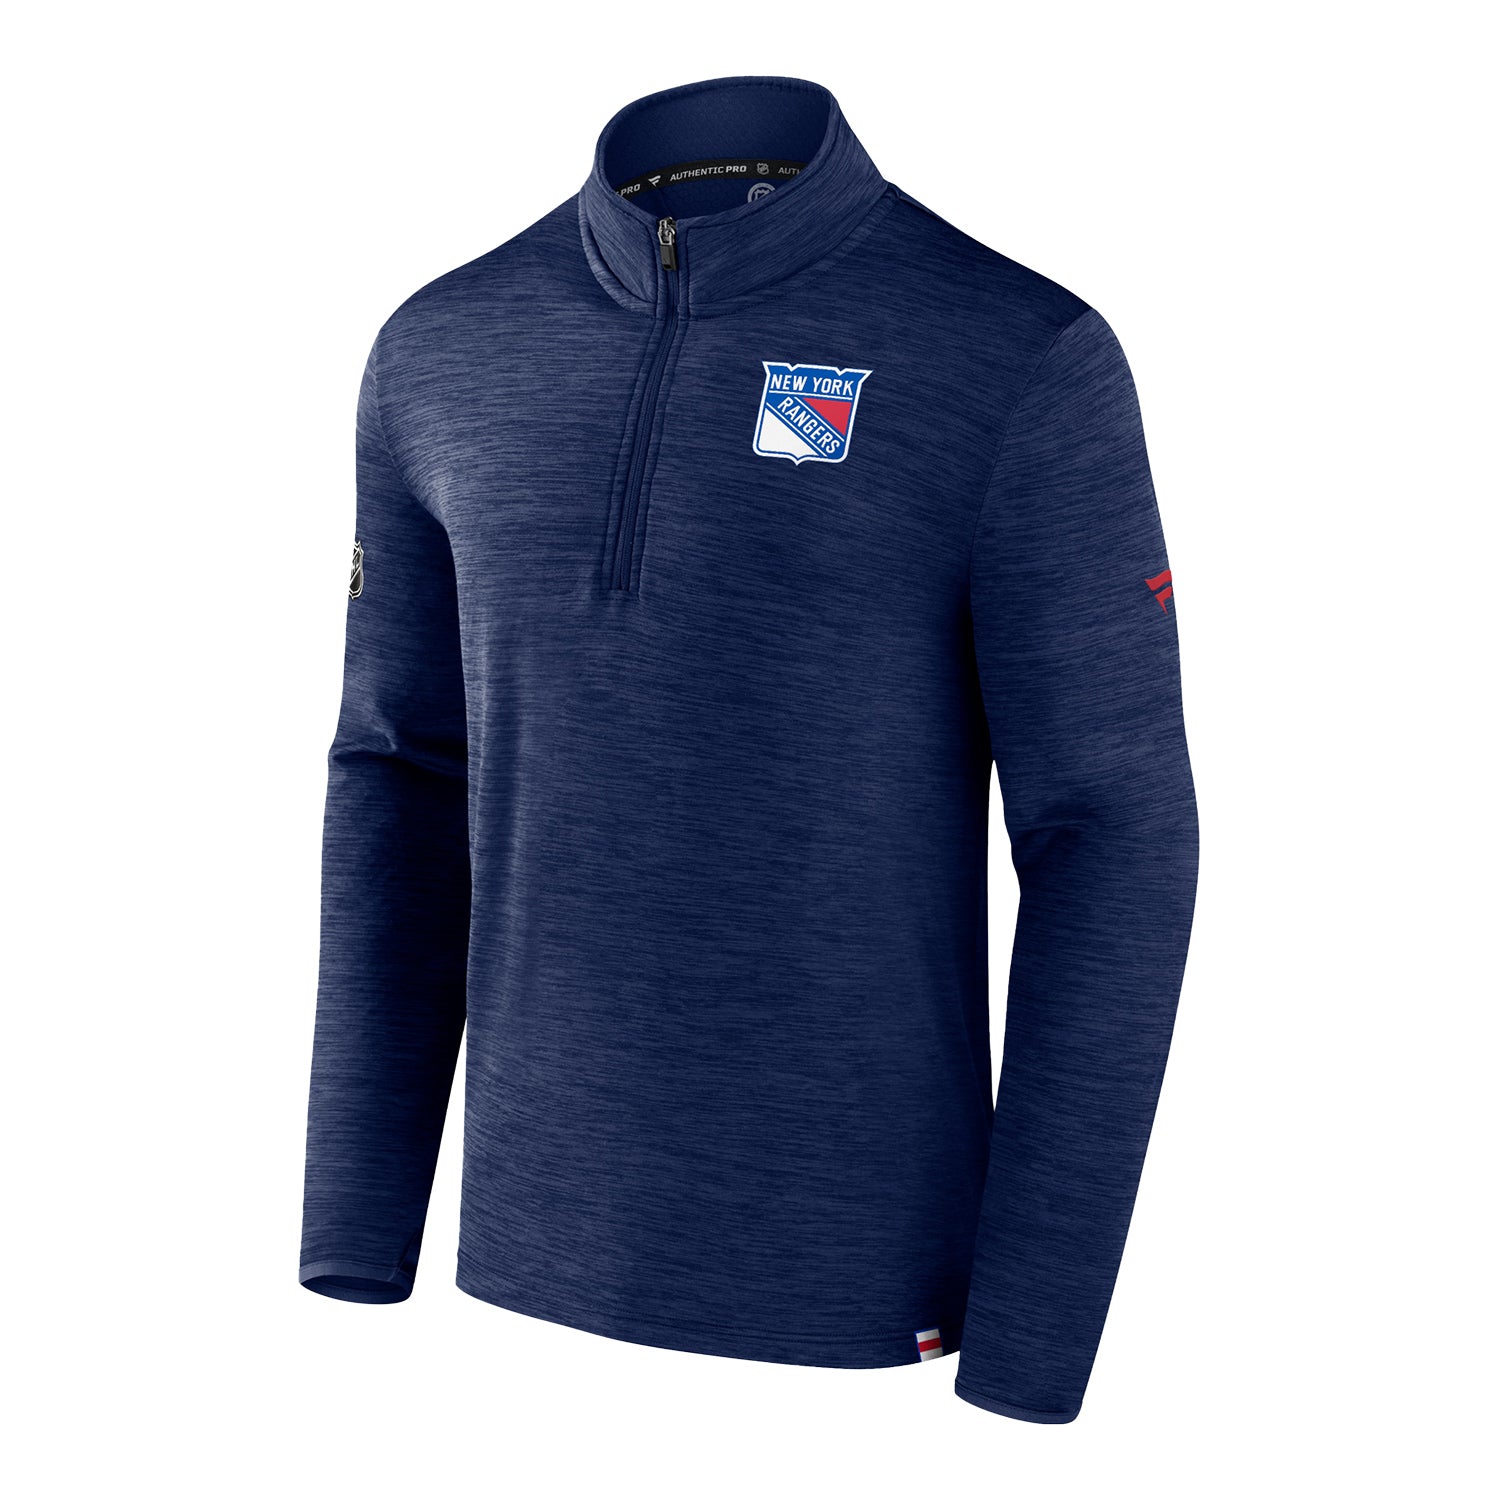 New York Rangers Fanatics Branded Authentic Pro Fleece Full Zip